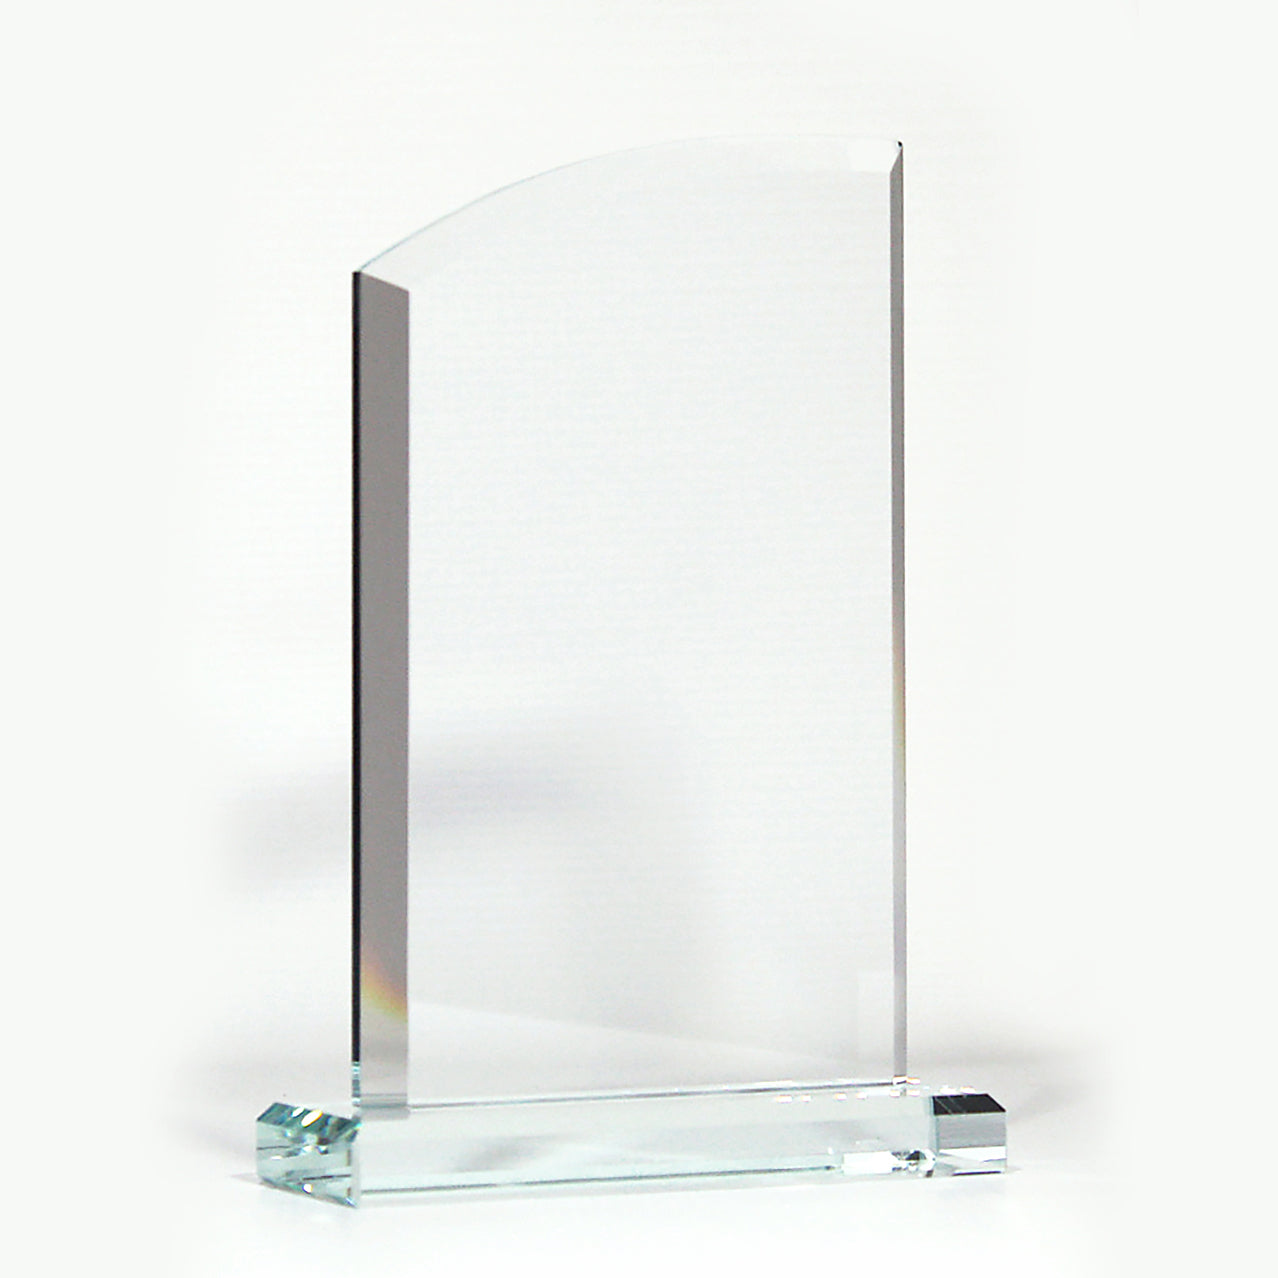 Crystal Arch Award